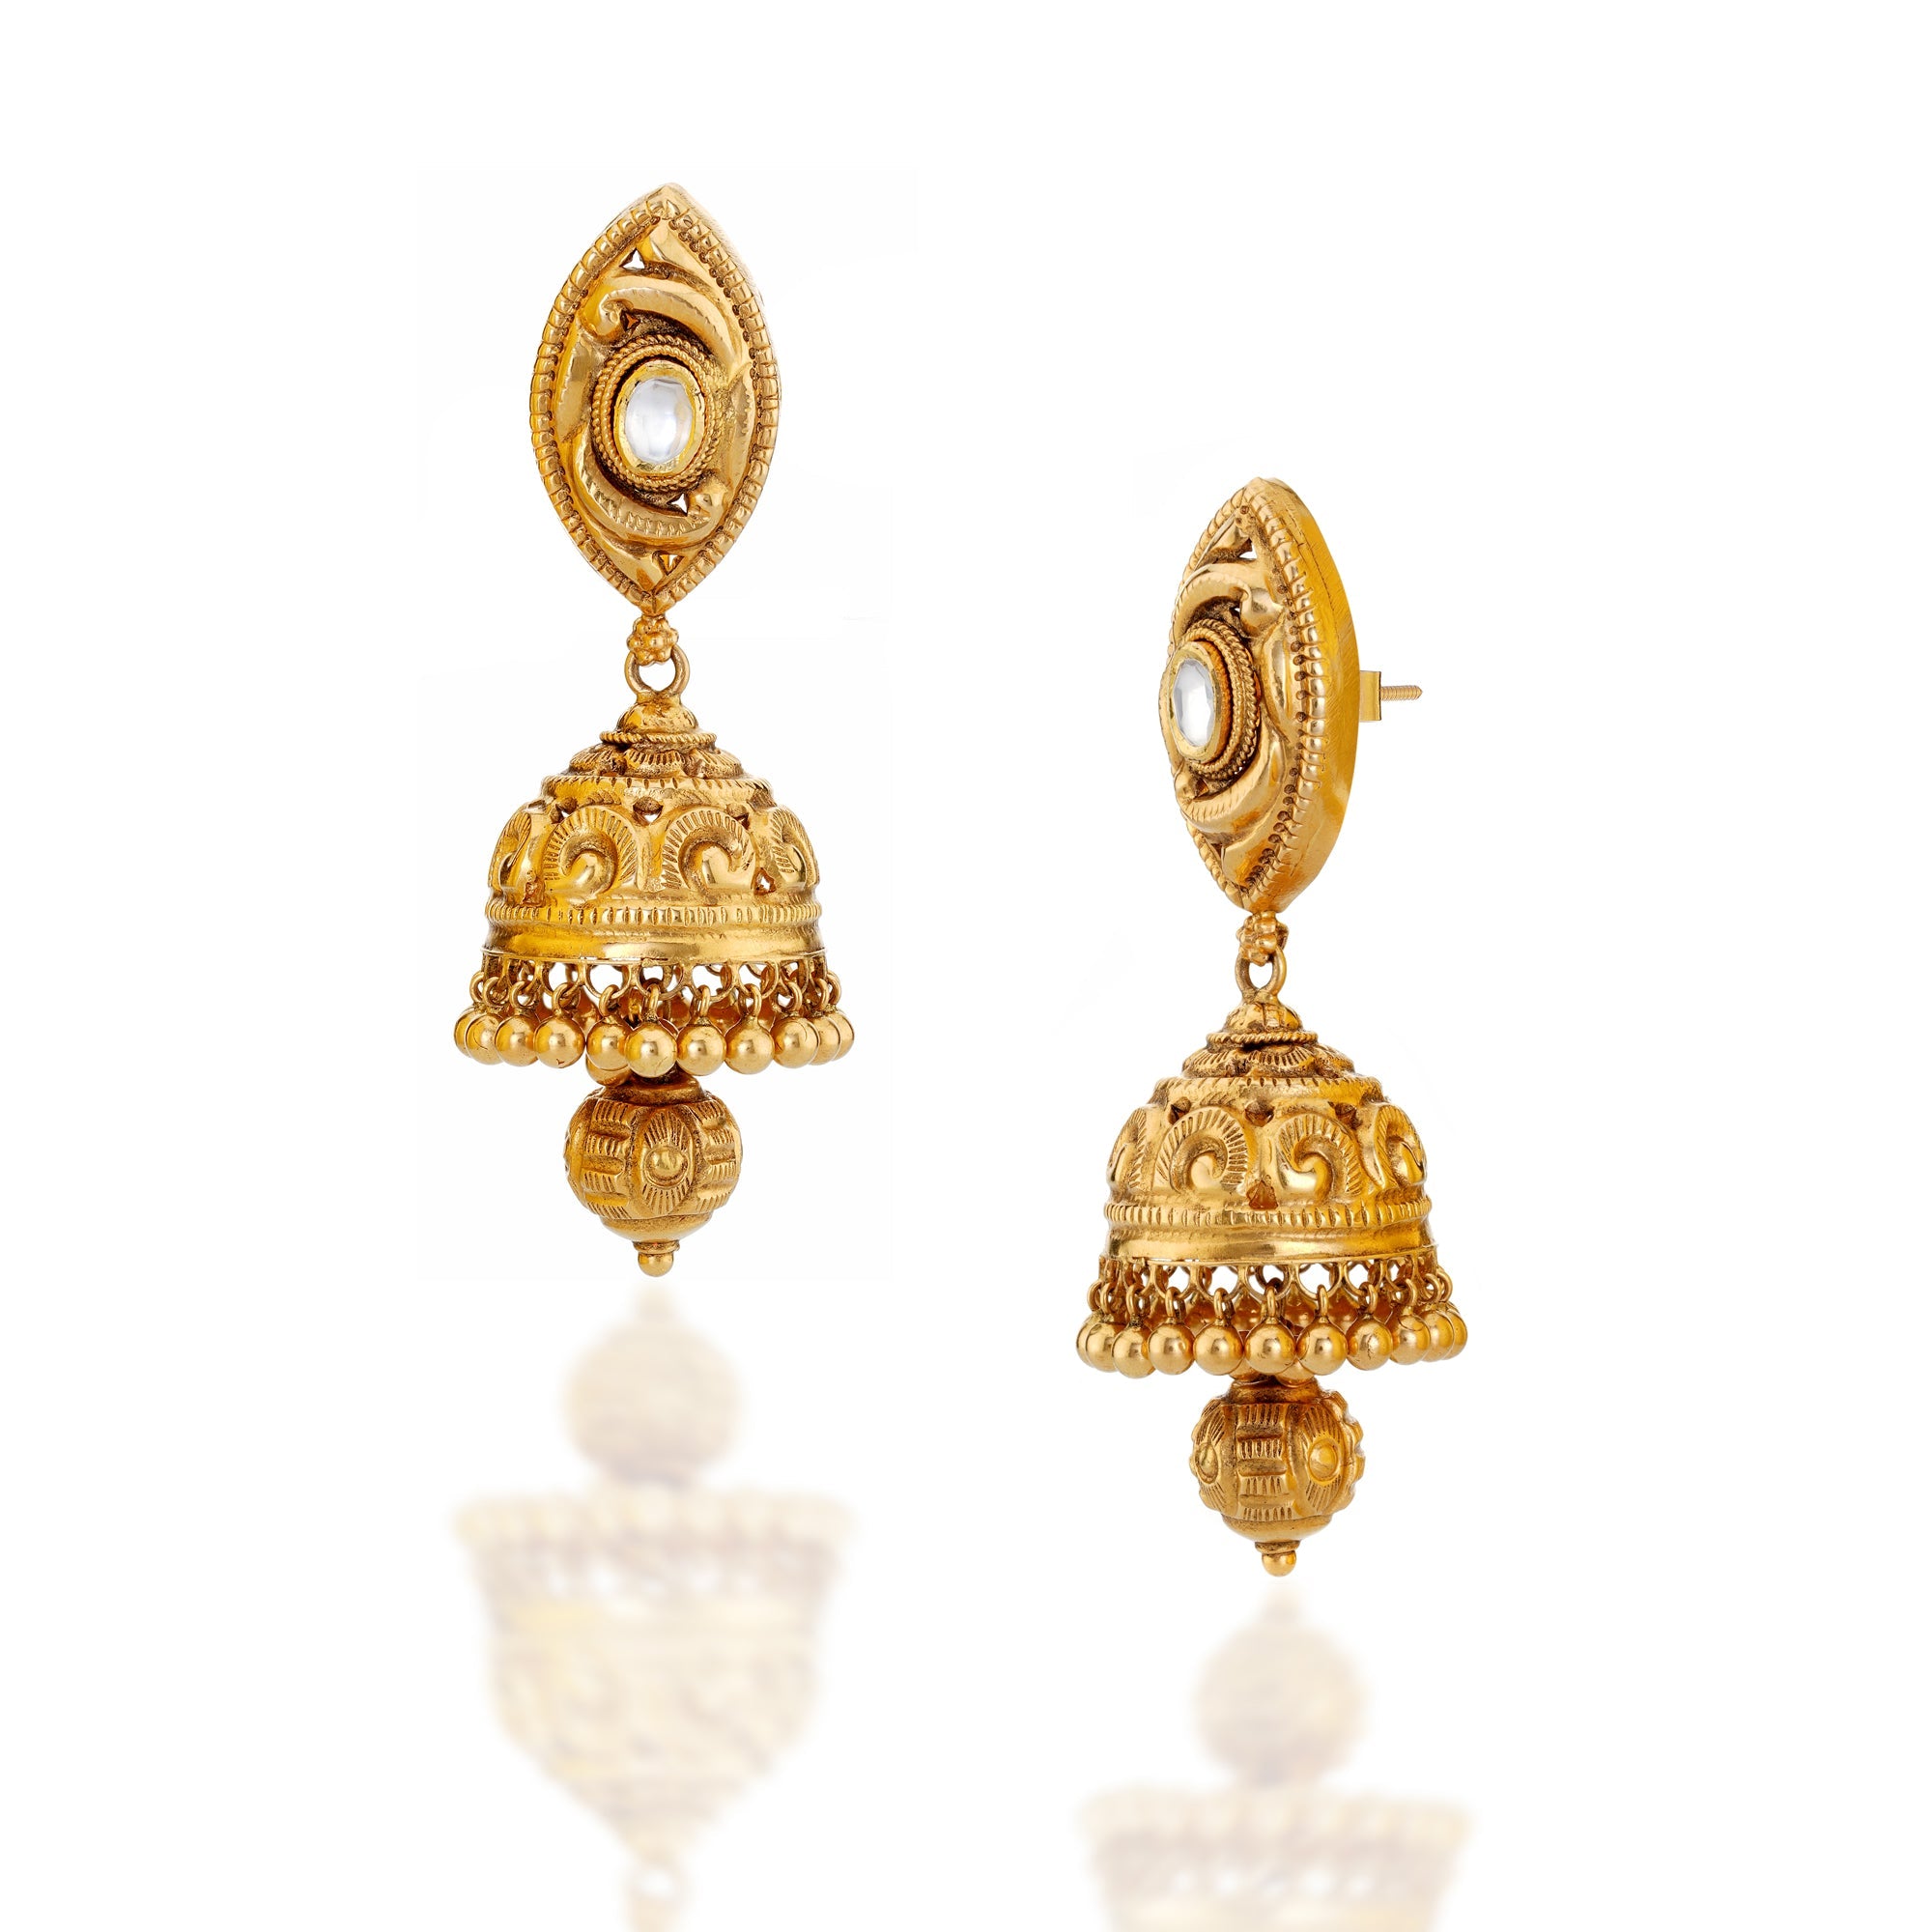 Basar Gold Earrings